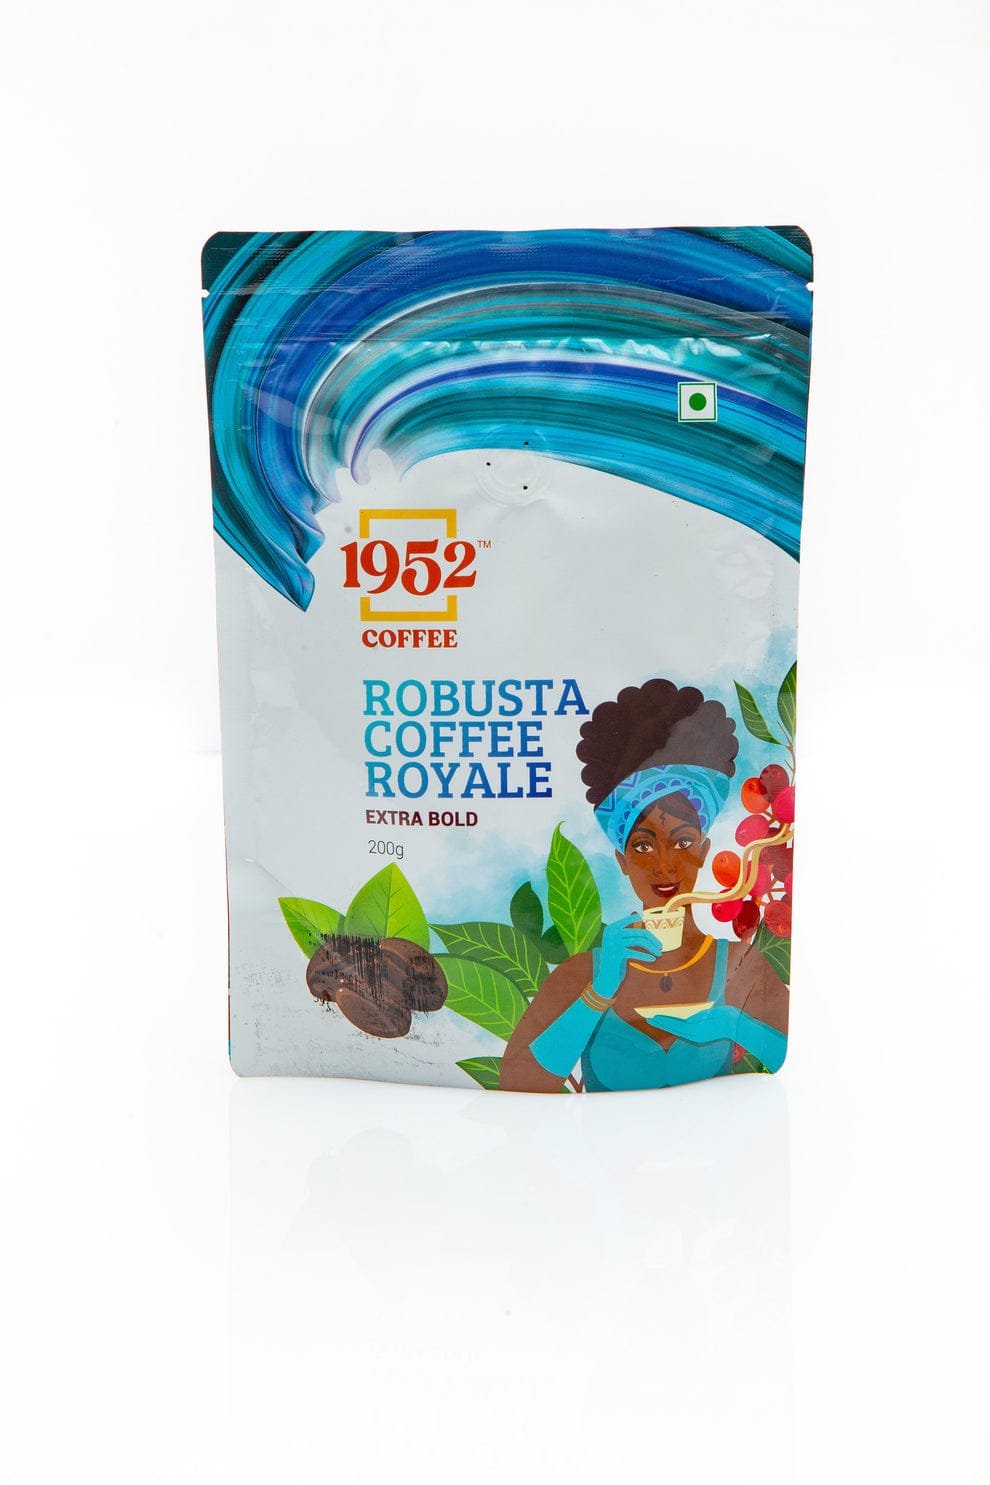 Robusta Coffee Royal Filter Coffee -200g×2 (100% Pure Coffee )